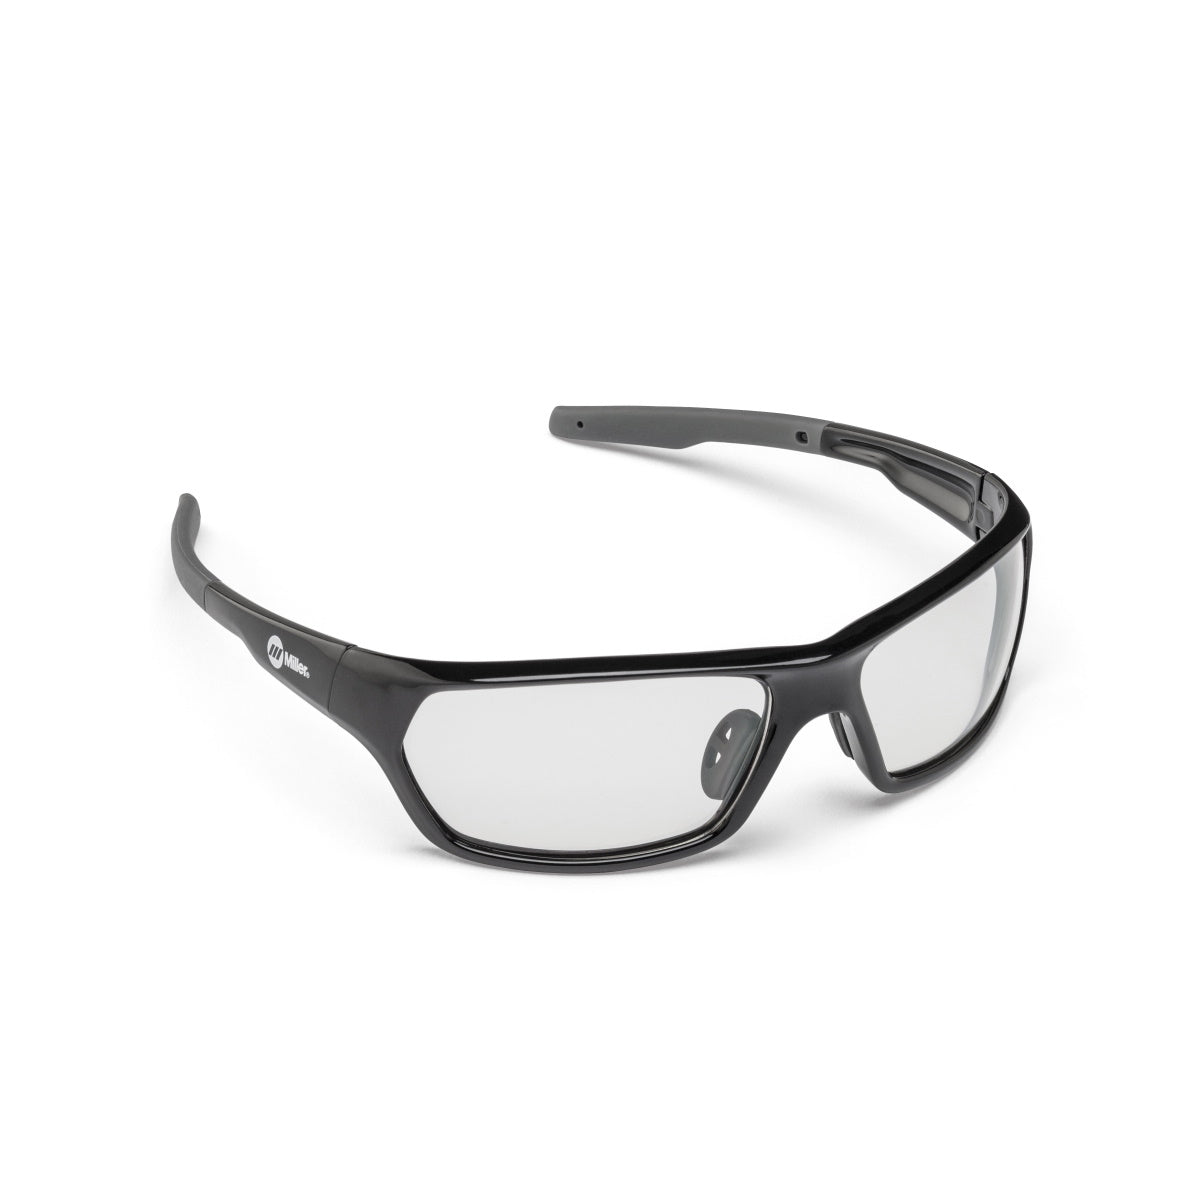  Black Frame Safety Glasses (272201)